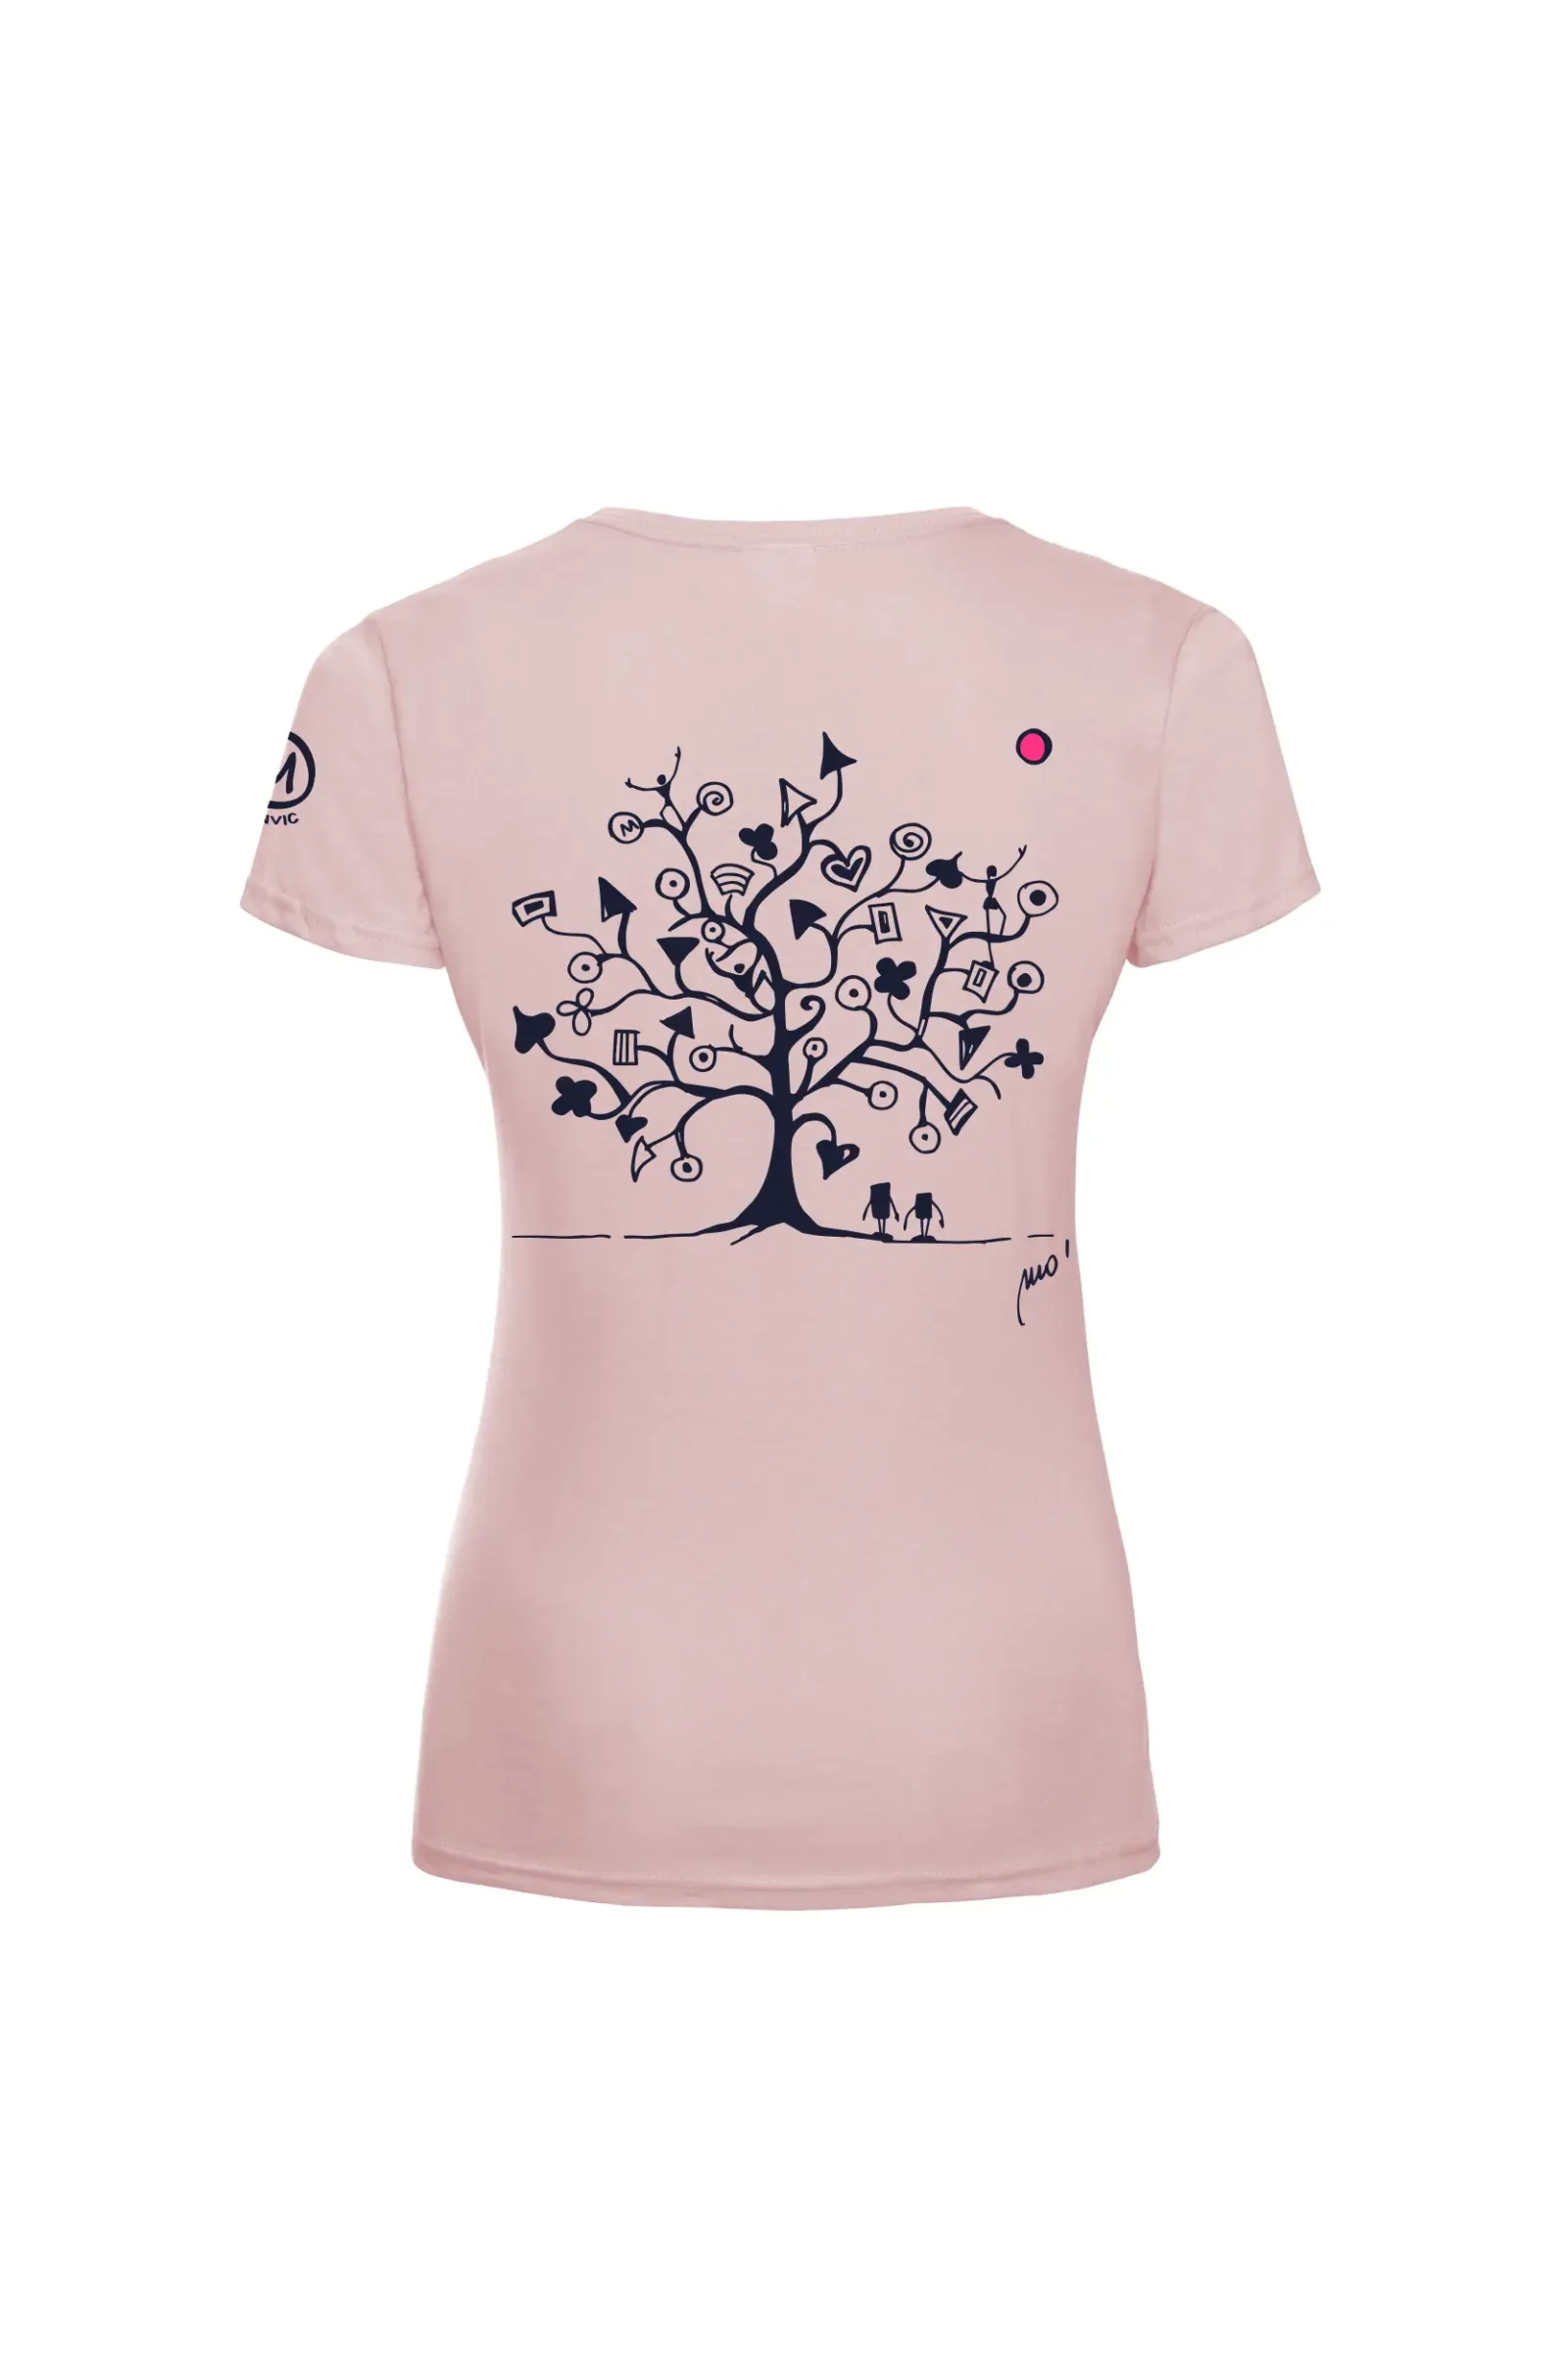 T-shirt escalade femme - coton rose - "Magic Tree" SHARON by MONVIC